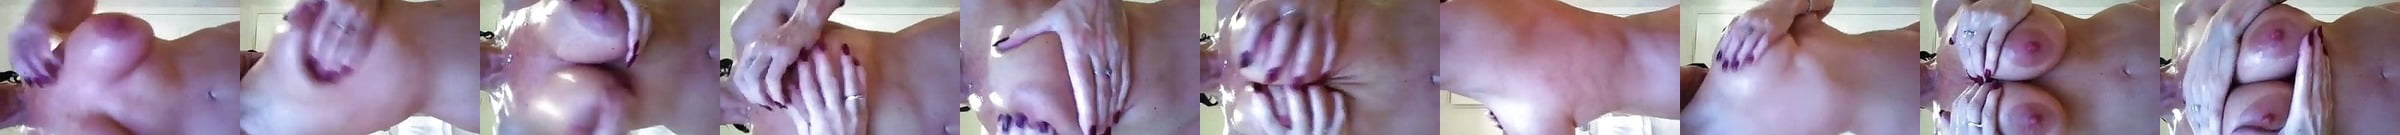 Fondling Tits Porn Videos Xhamster